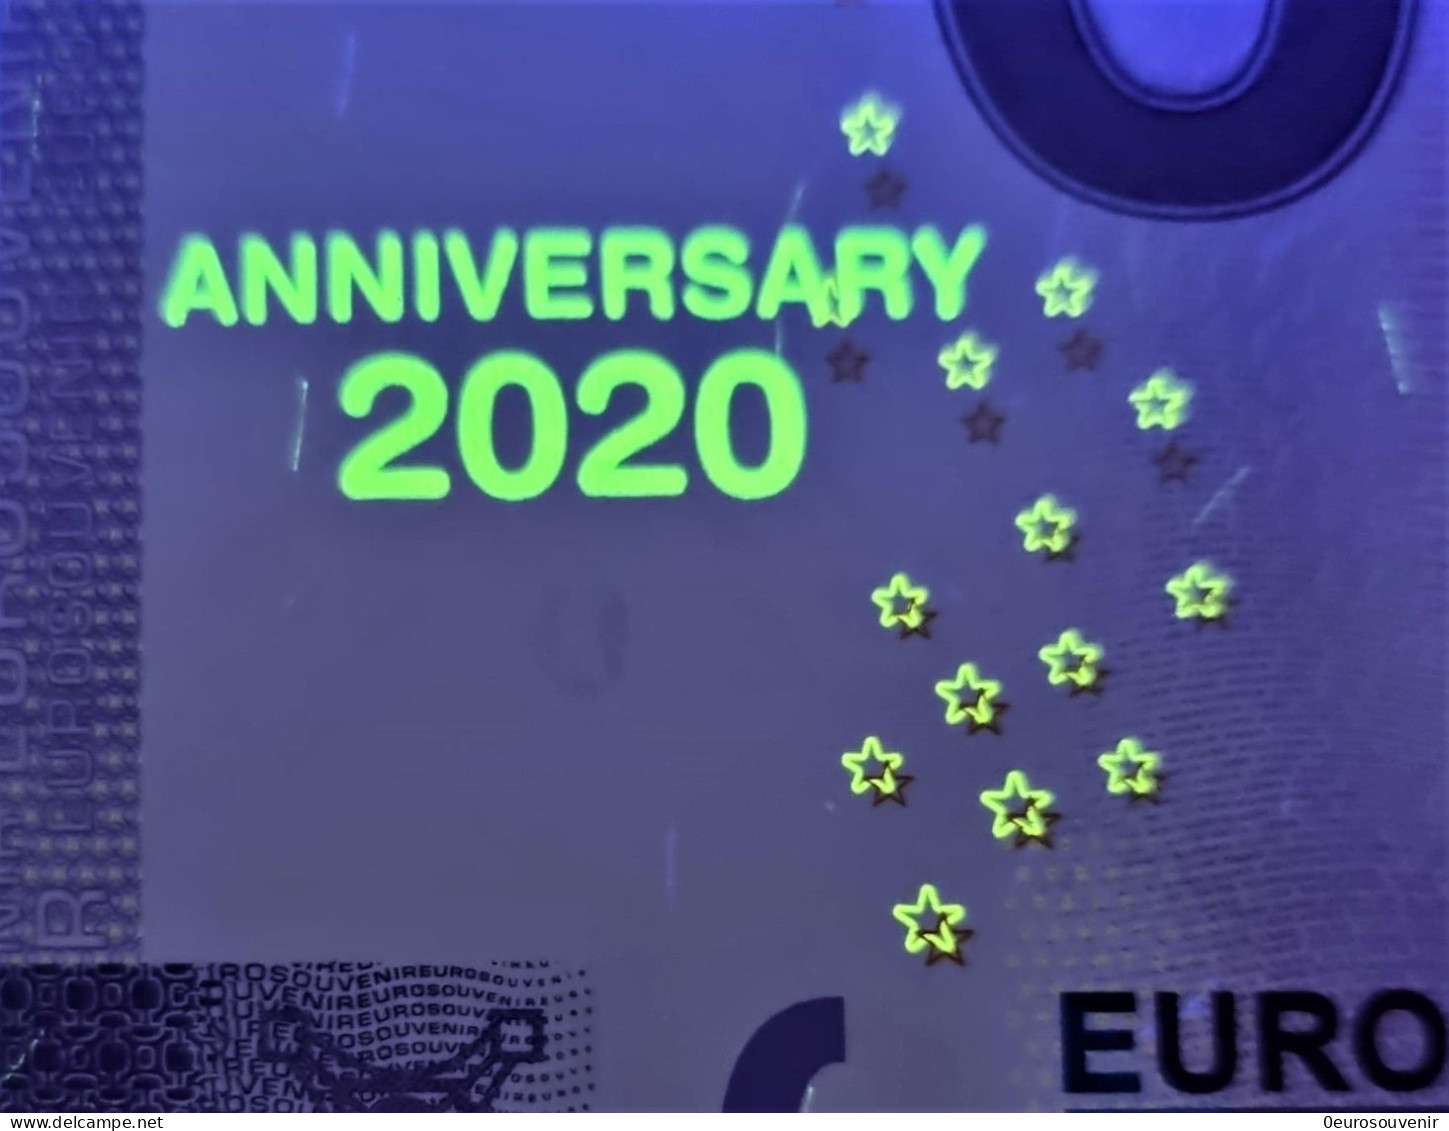 0-Euro ZEJG / XEJG 2020-13 Fehldruck SCHLOSS BURG - ANGRIFF DER SCHWEDEN Set NORMAL+ANNIVERSARY - Pruebas Privadas